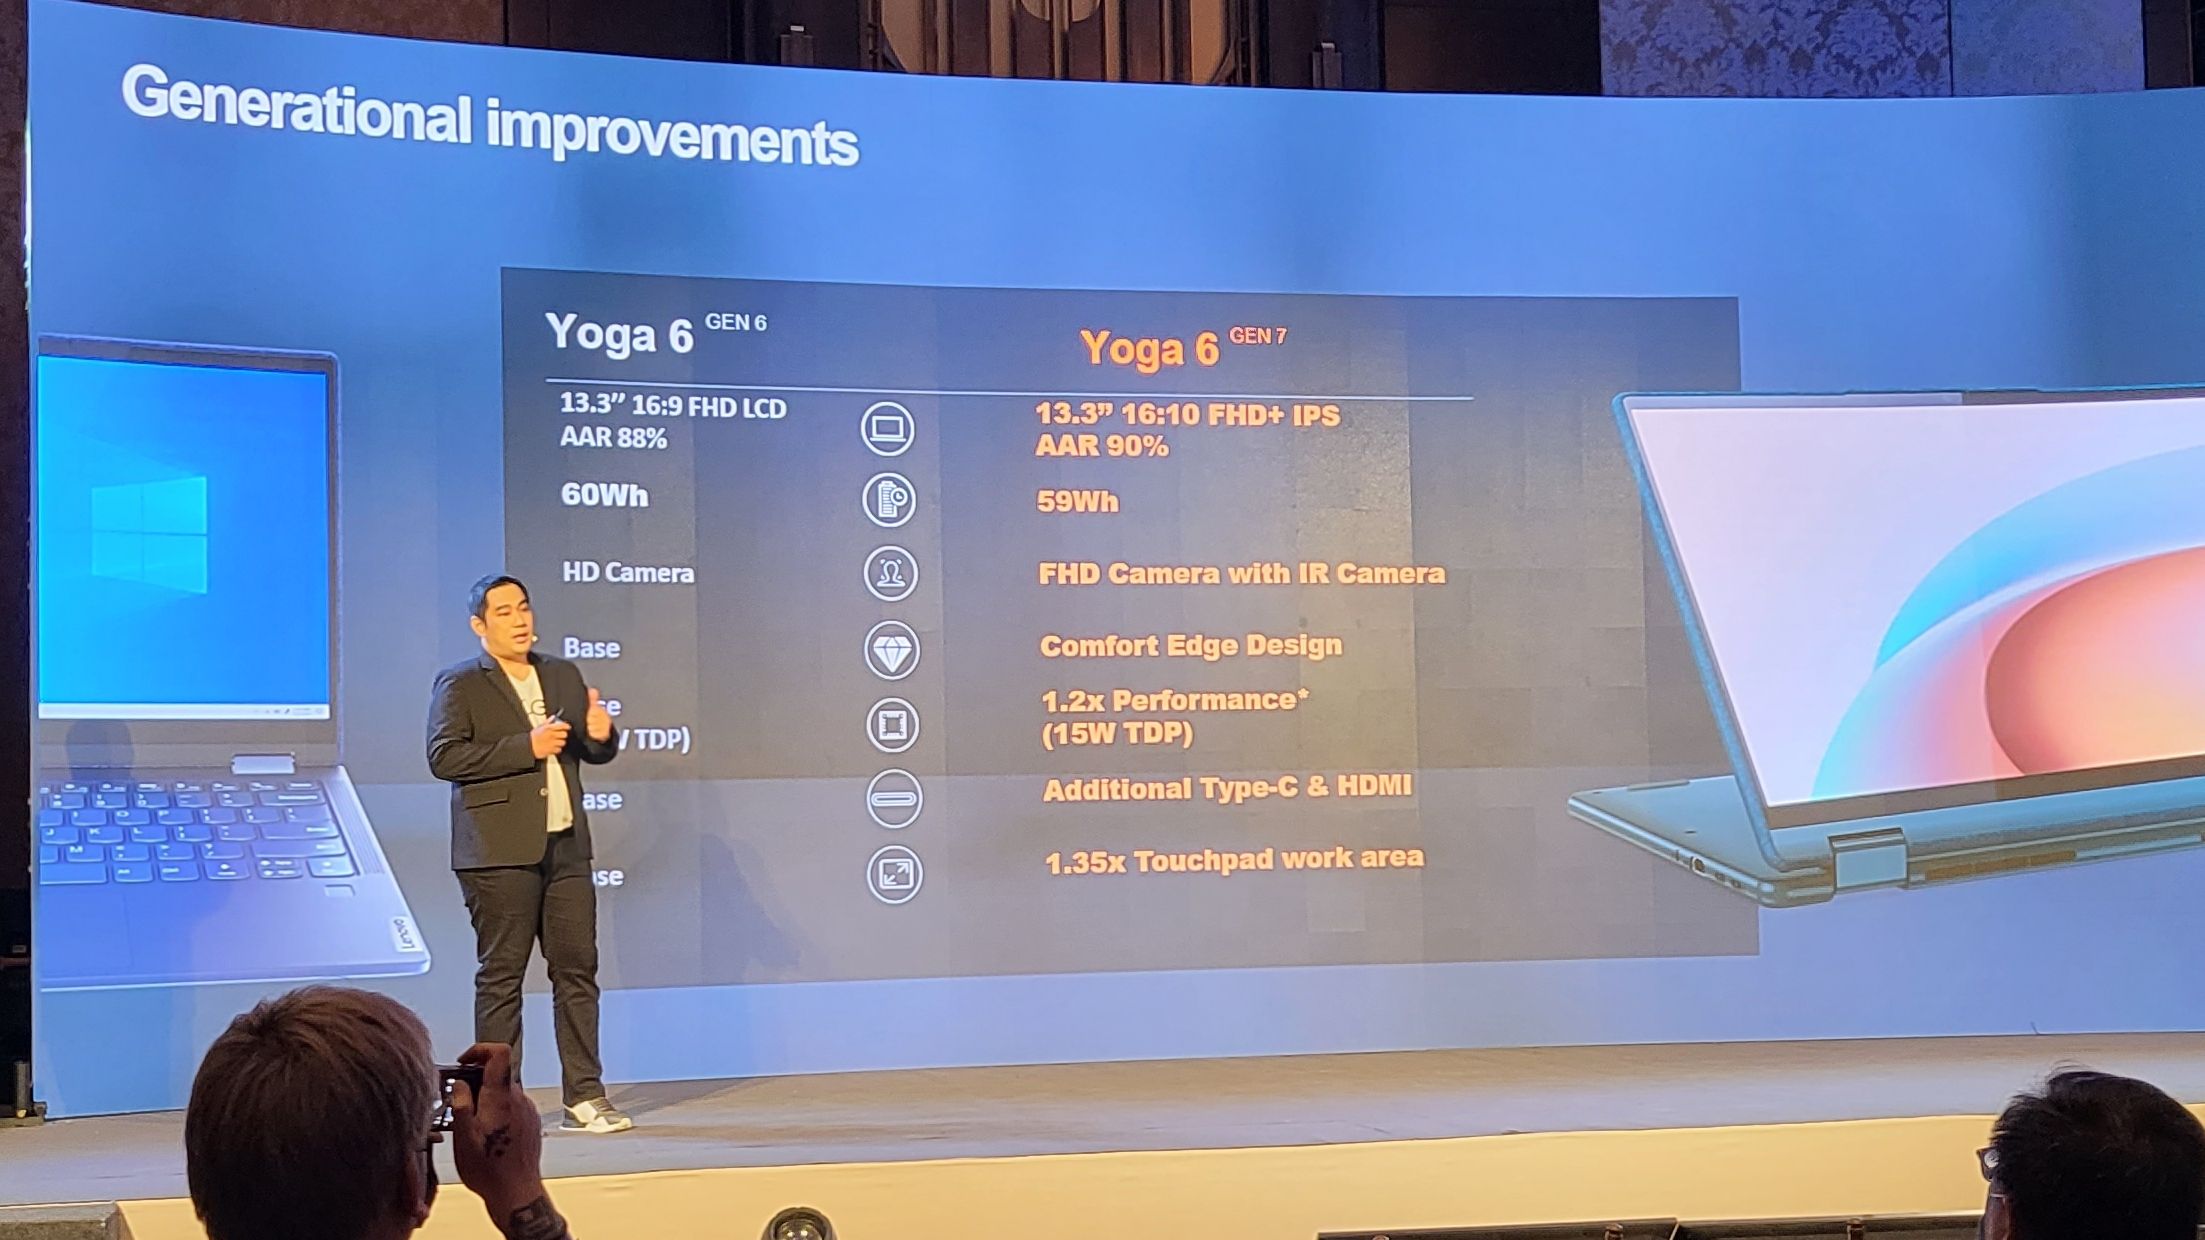 Lenovo เปิดตัว 7 โน้ตบุ๊คตระกูล Yoga ปี 2022 จัดเต็มทั้งชิปใหม่ Intel, AMD จอ 4K OLED / 3K 120Hz ดีไซน์หรูหราและบางเบา